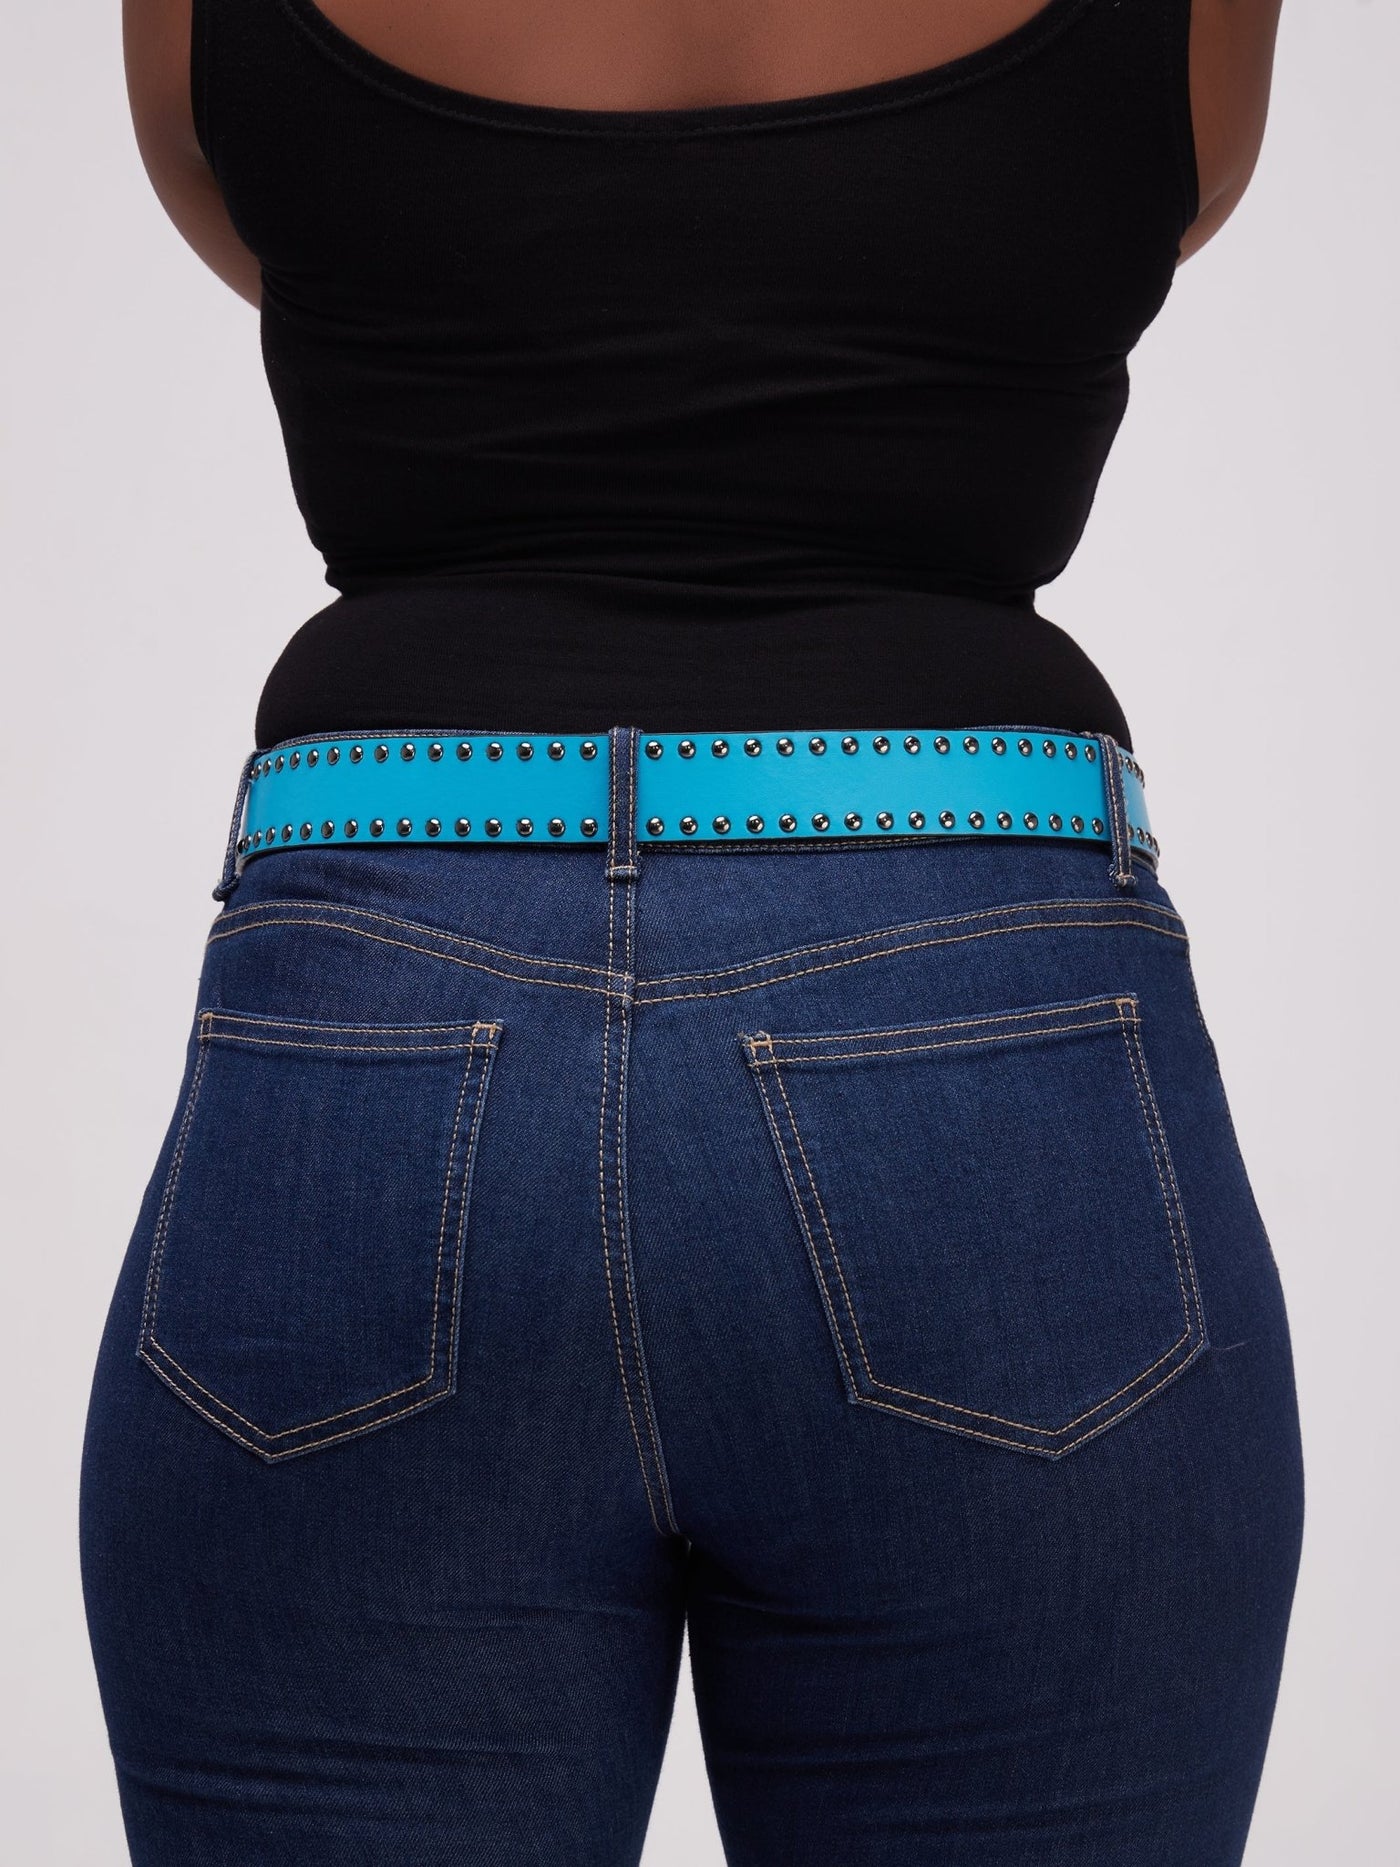 Lizola Ajabu Dotted Belt - Blue - Shop Zetu Kenya